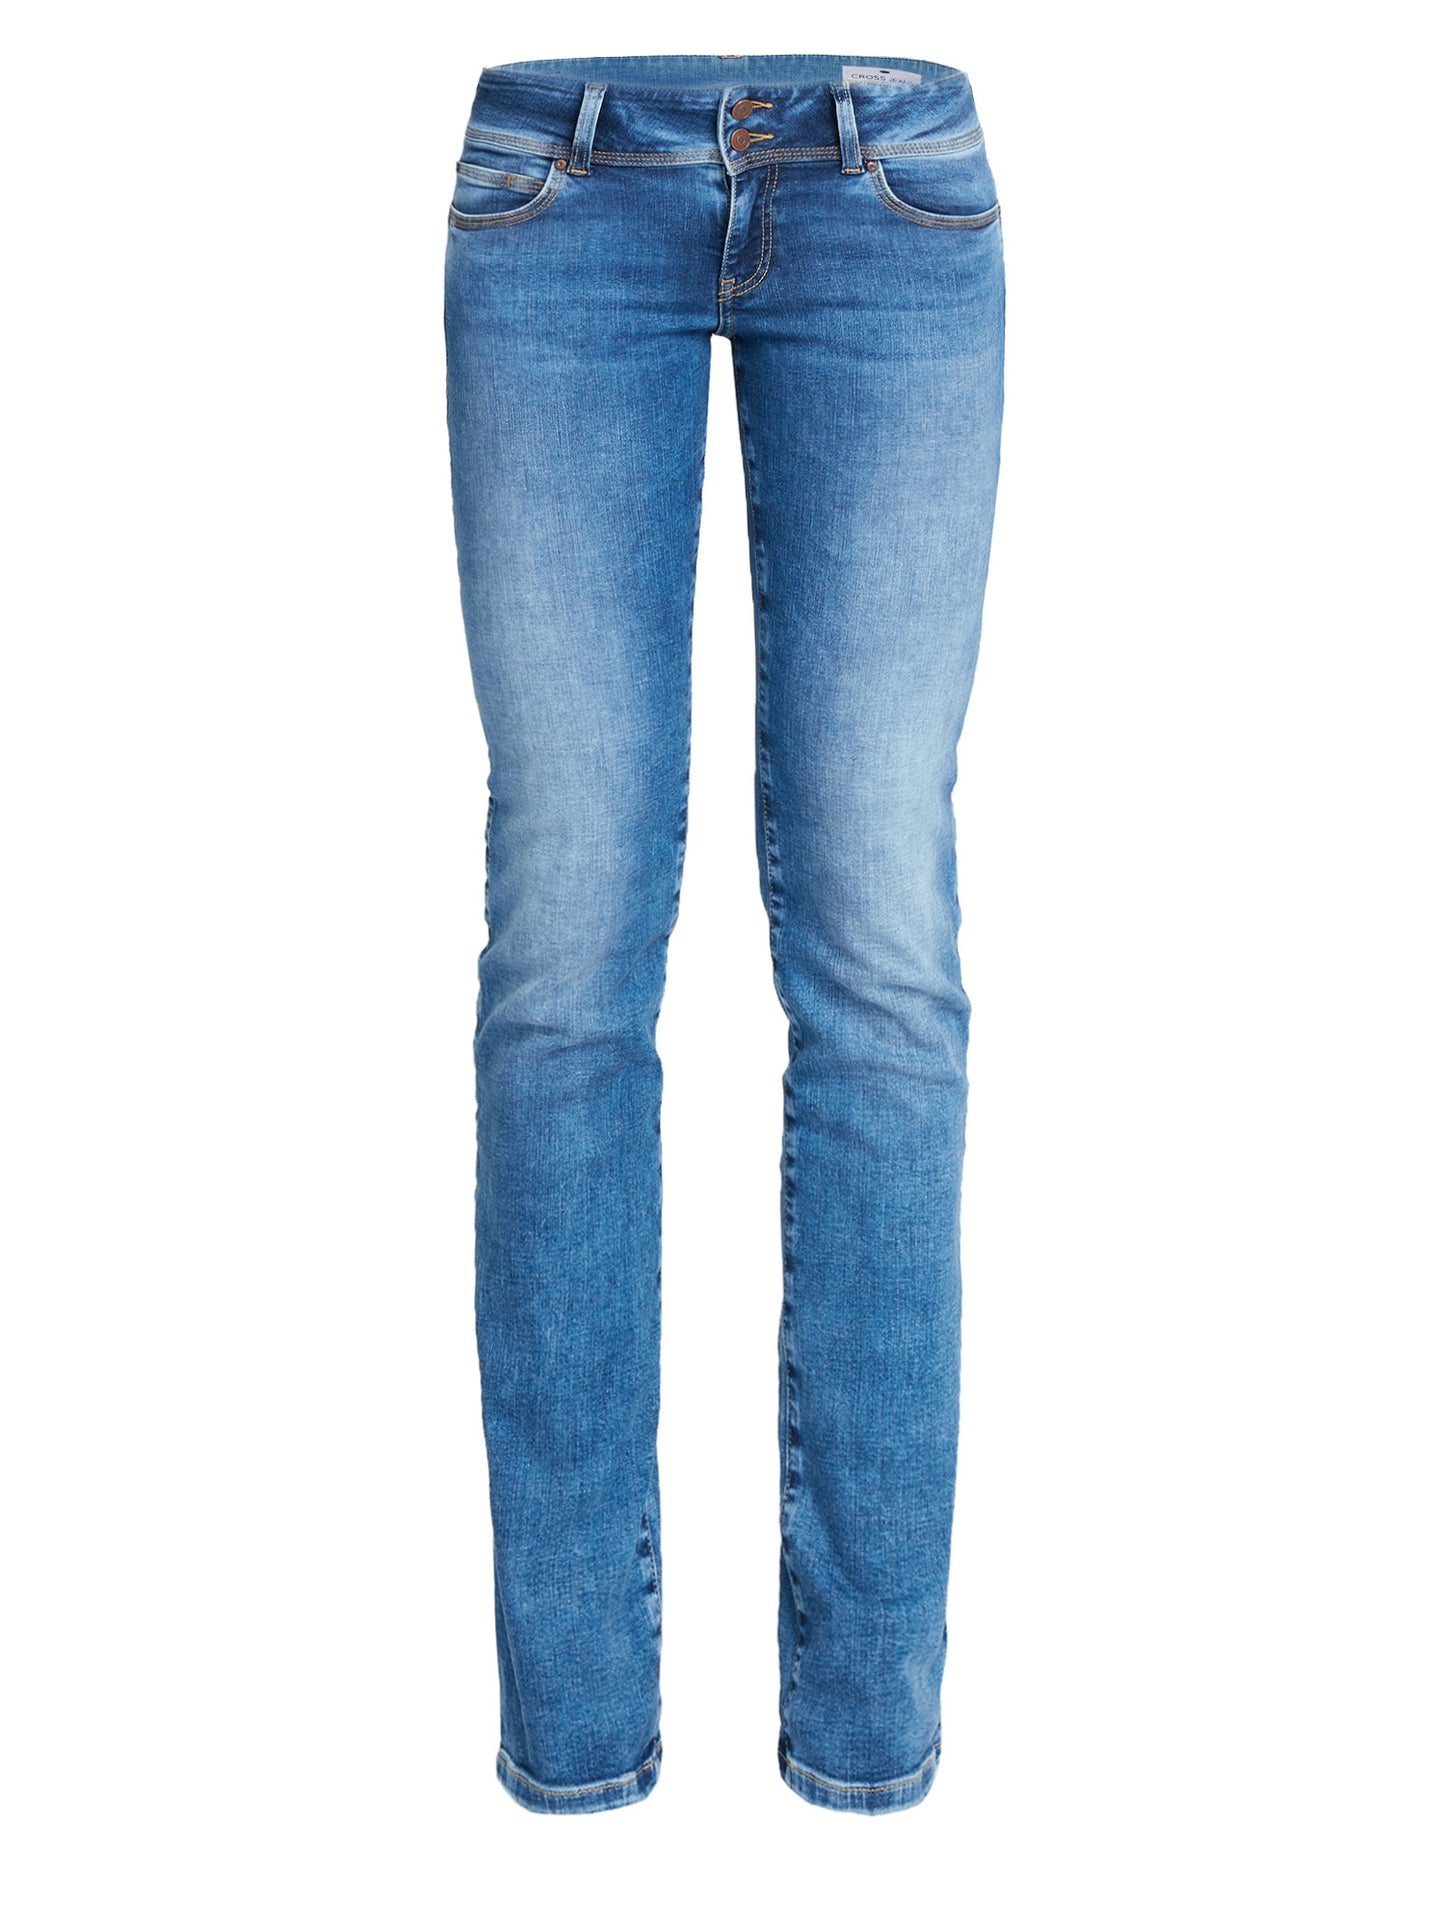 Loie women's jeans regular fit mid waist straight leg medium blue